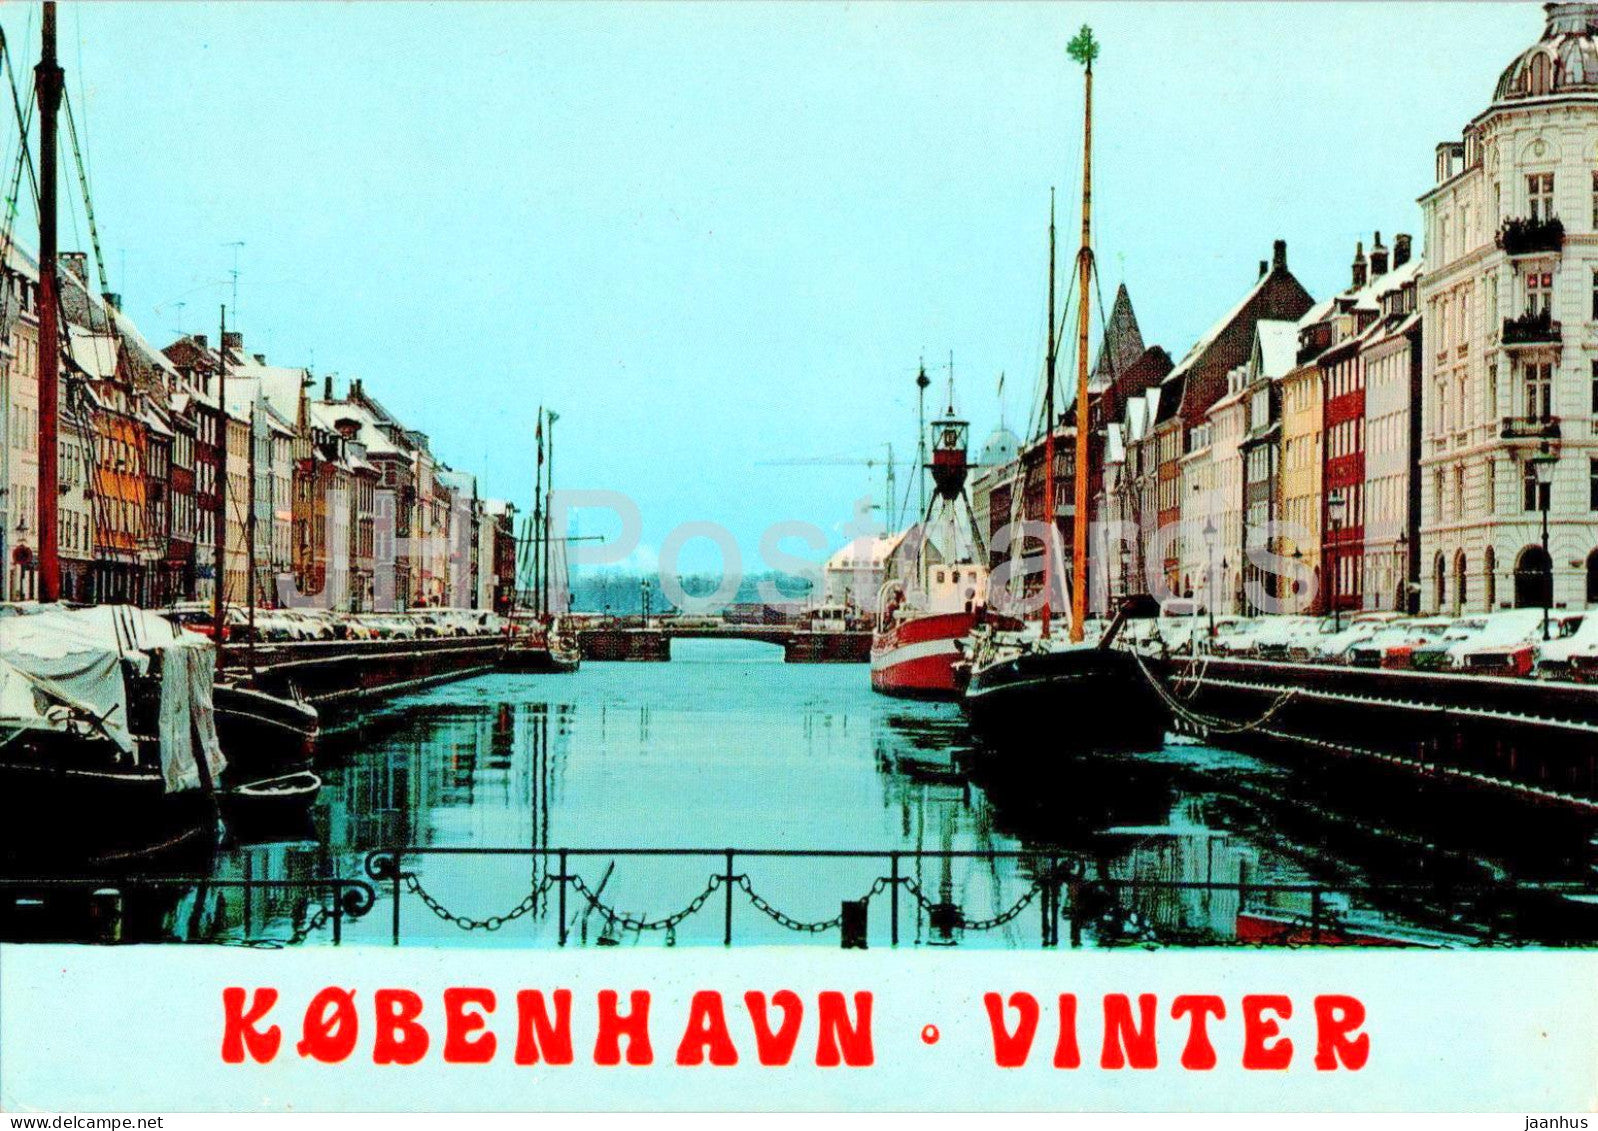 Copenhagen - Kobenhavn - Nyhavn in the Snow - sailing ship - 113 - Denmark - unused - JH Postcards